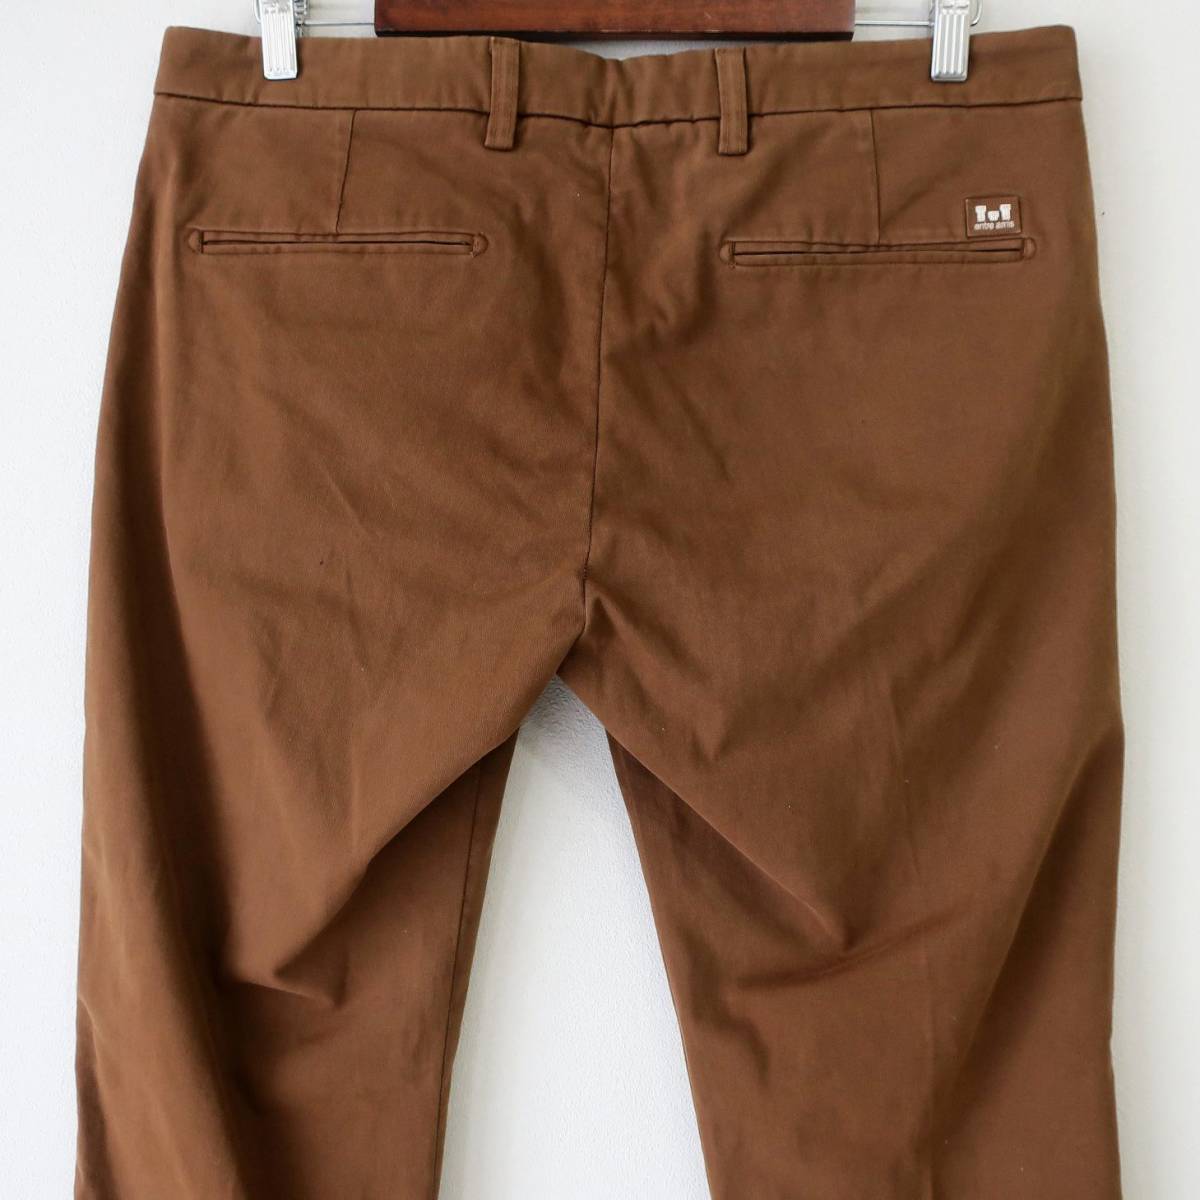  new goods unused Anne to rare mientre amis men's stretch chinos slim skinny slacks pants tea color Brown 50 / W36 XL 2L